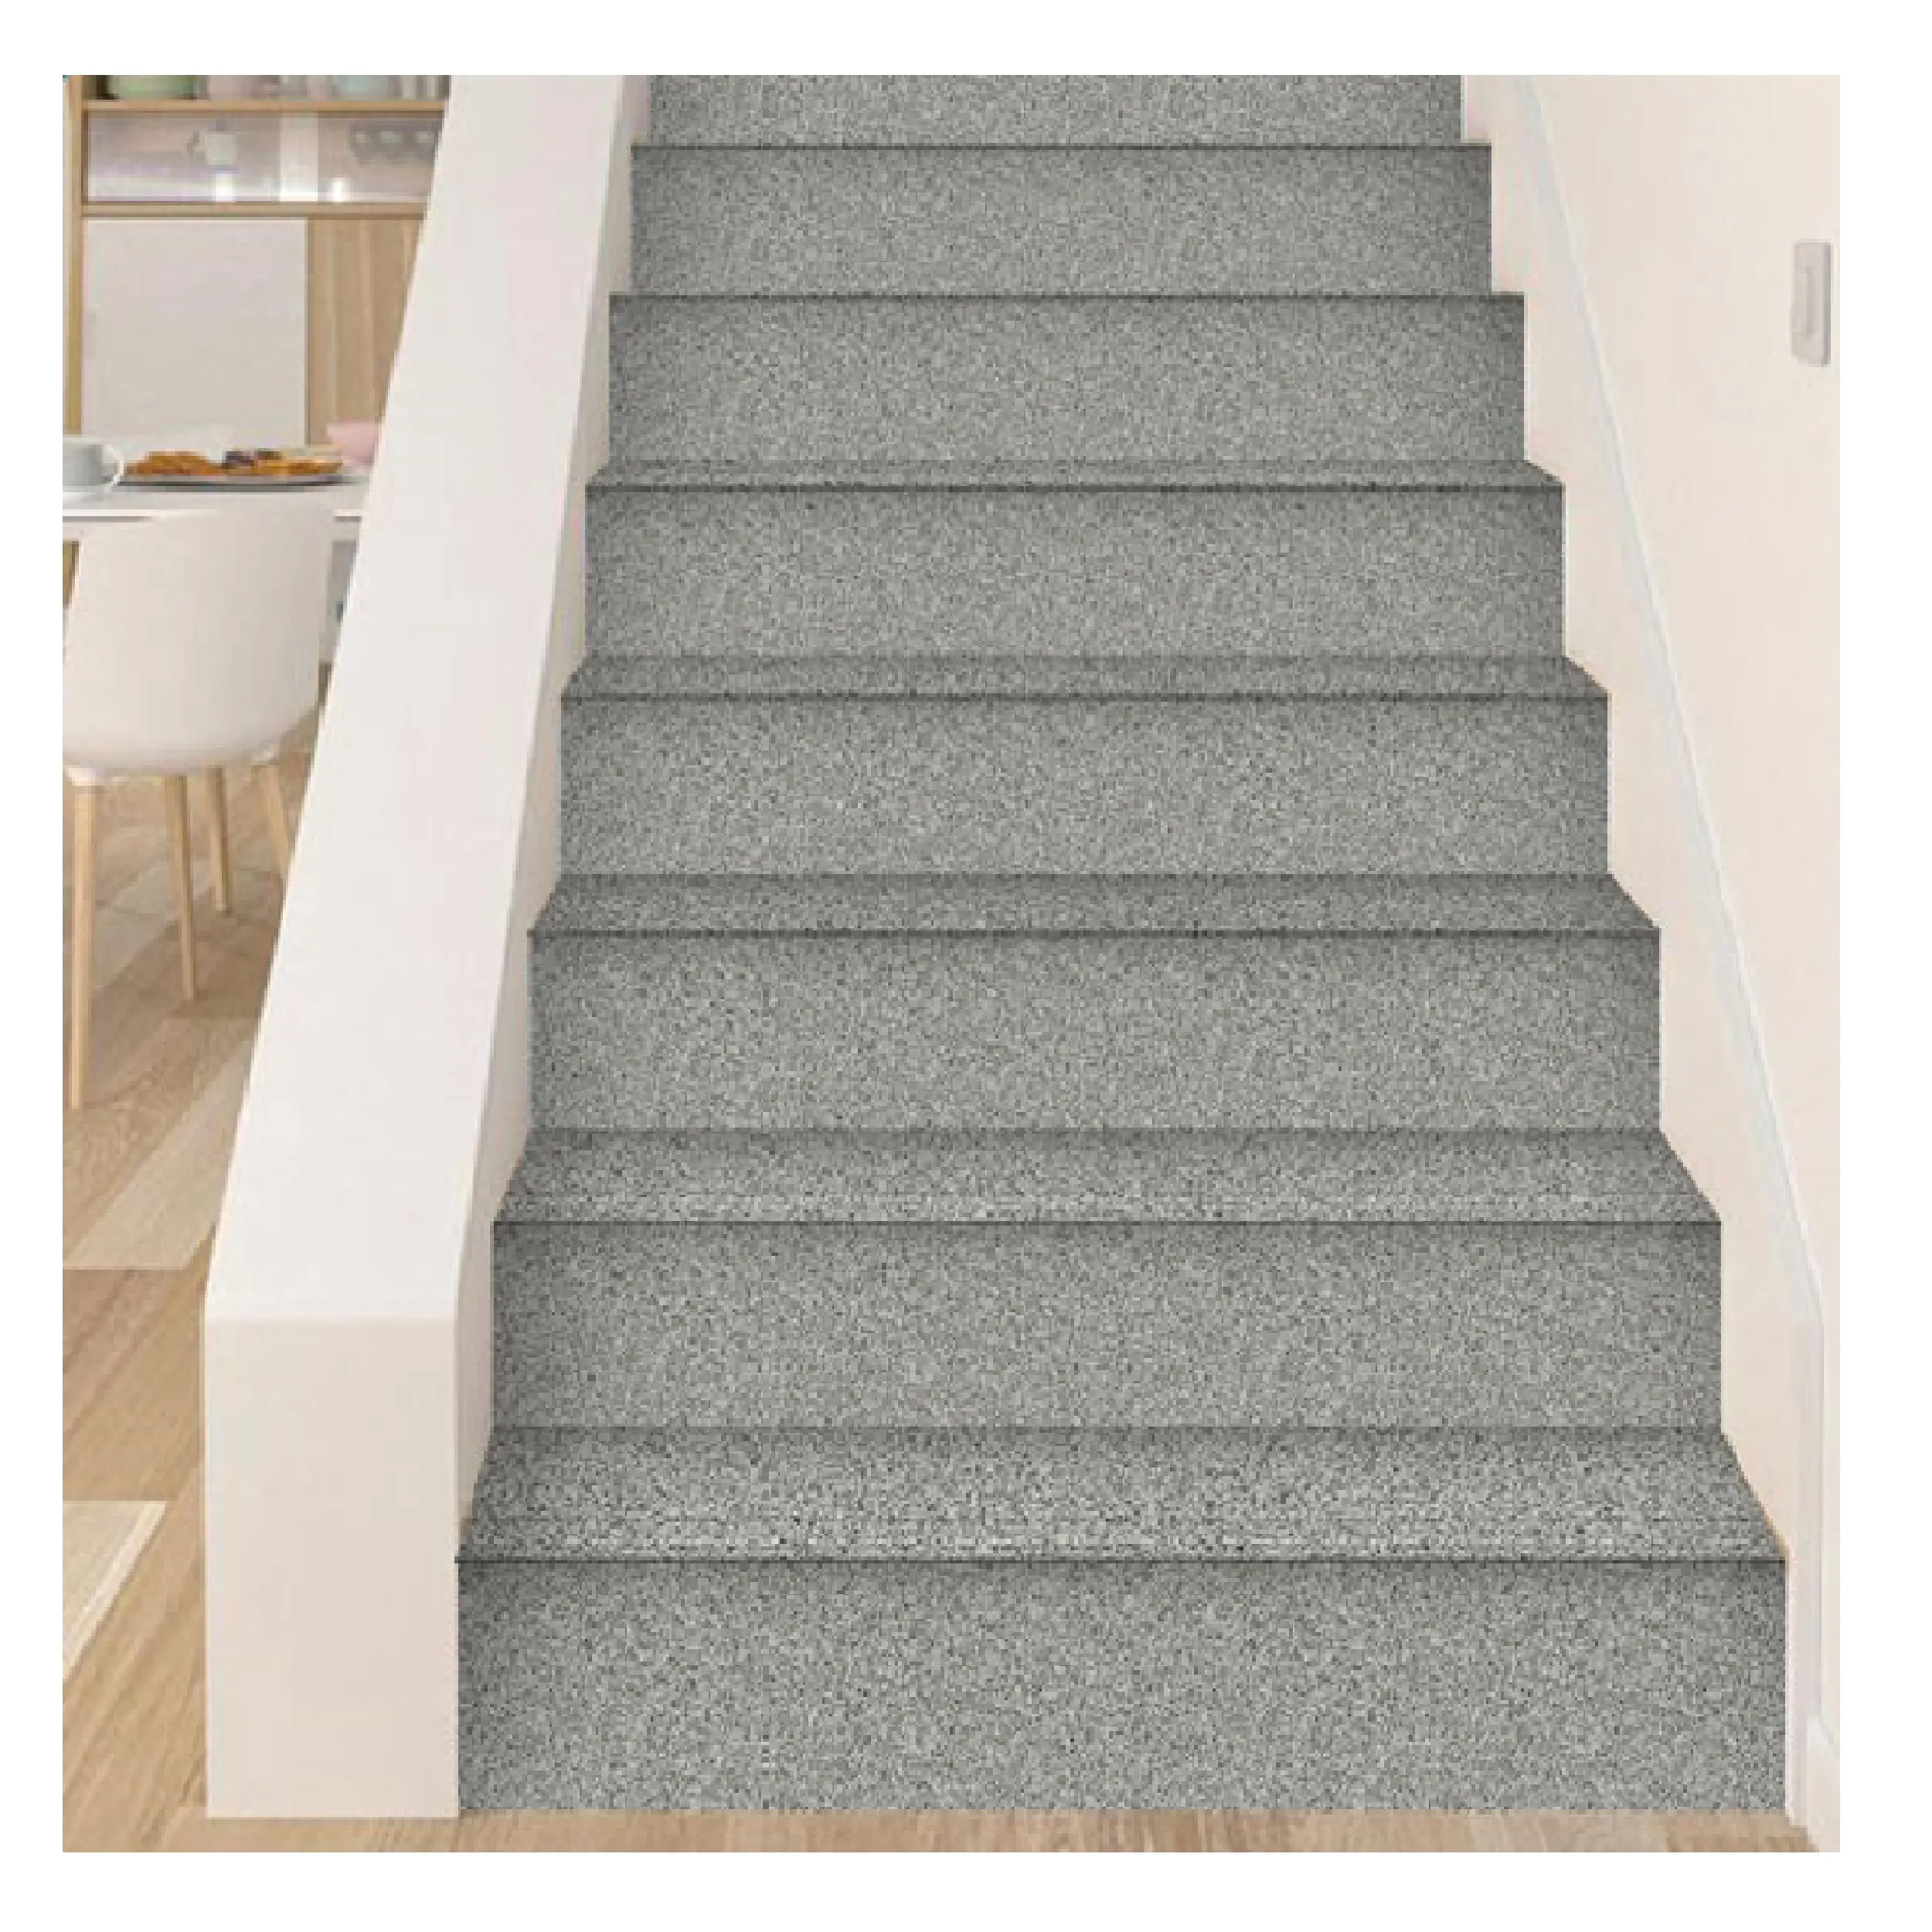 Step Tiles antideslizantes para escaleras, baldosas de estilo Interior contemporáneo, Alfombra de mármol blanco, antideslizante, 30x120cm